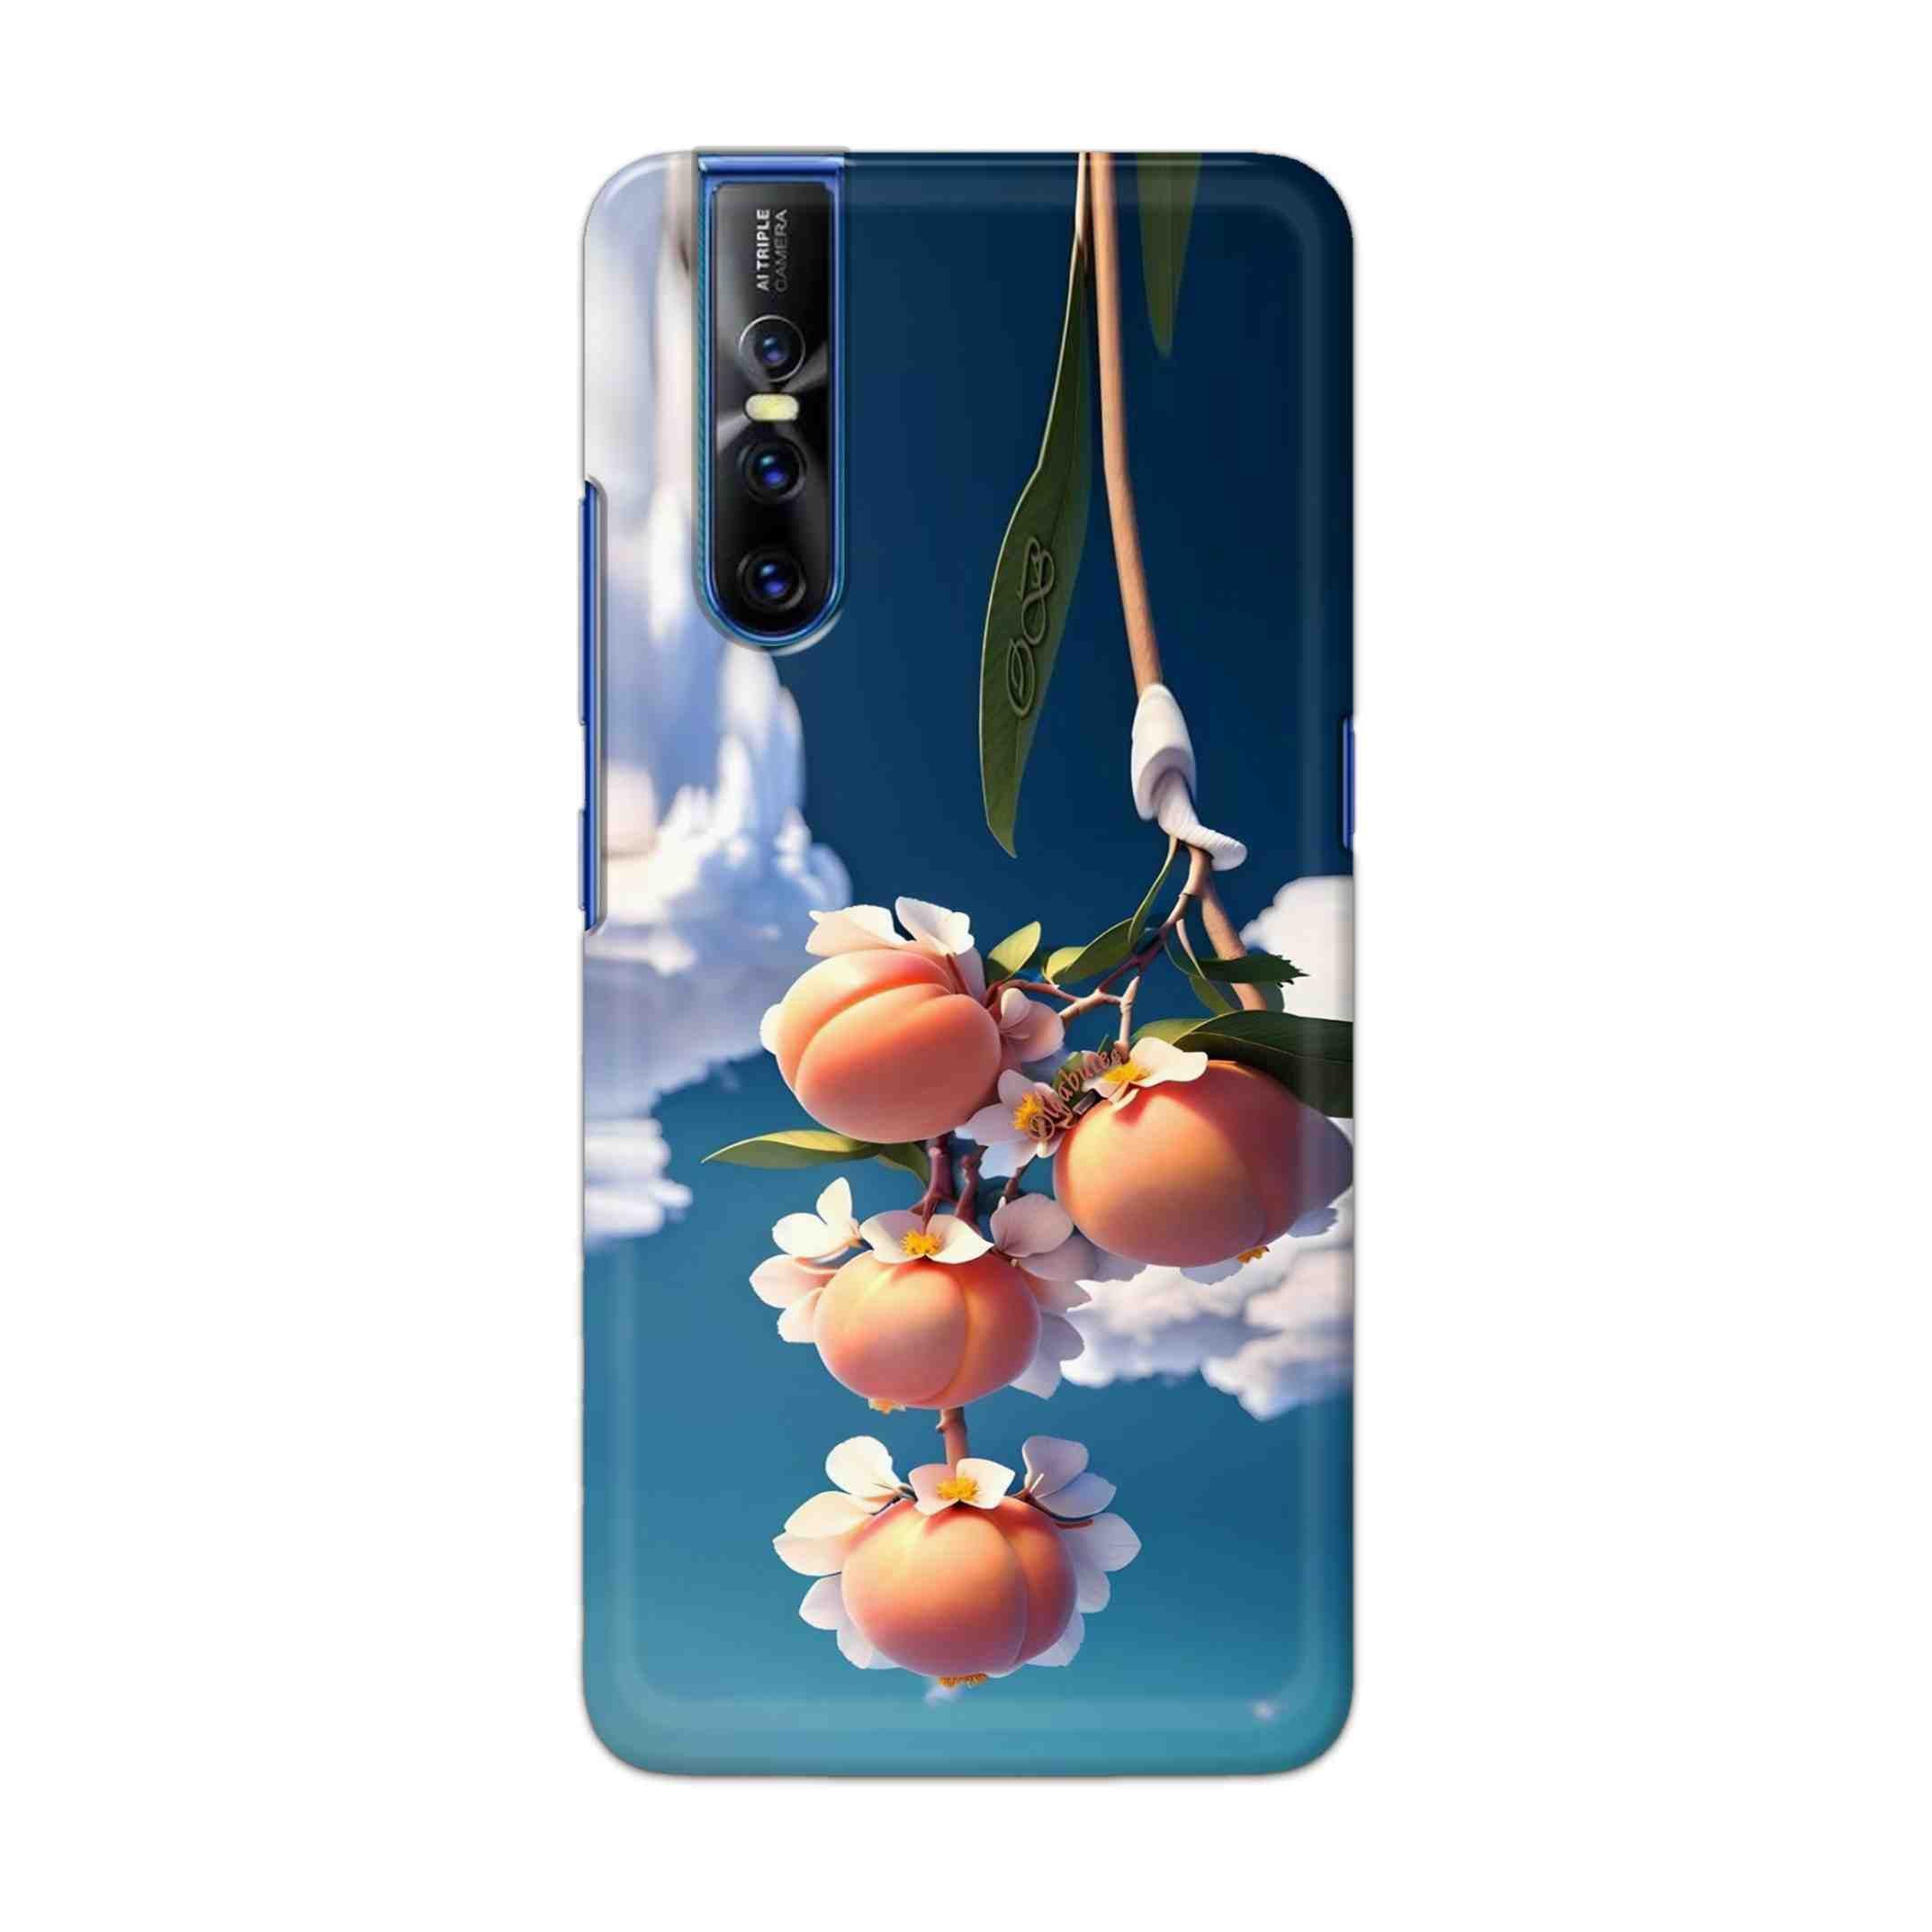 Buy Fruit Hard Back Mobile Phone Case Cover For Vivo V15 Pro Online